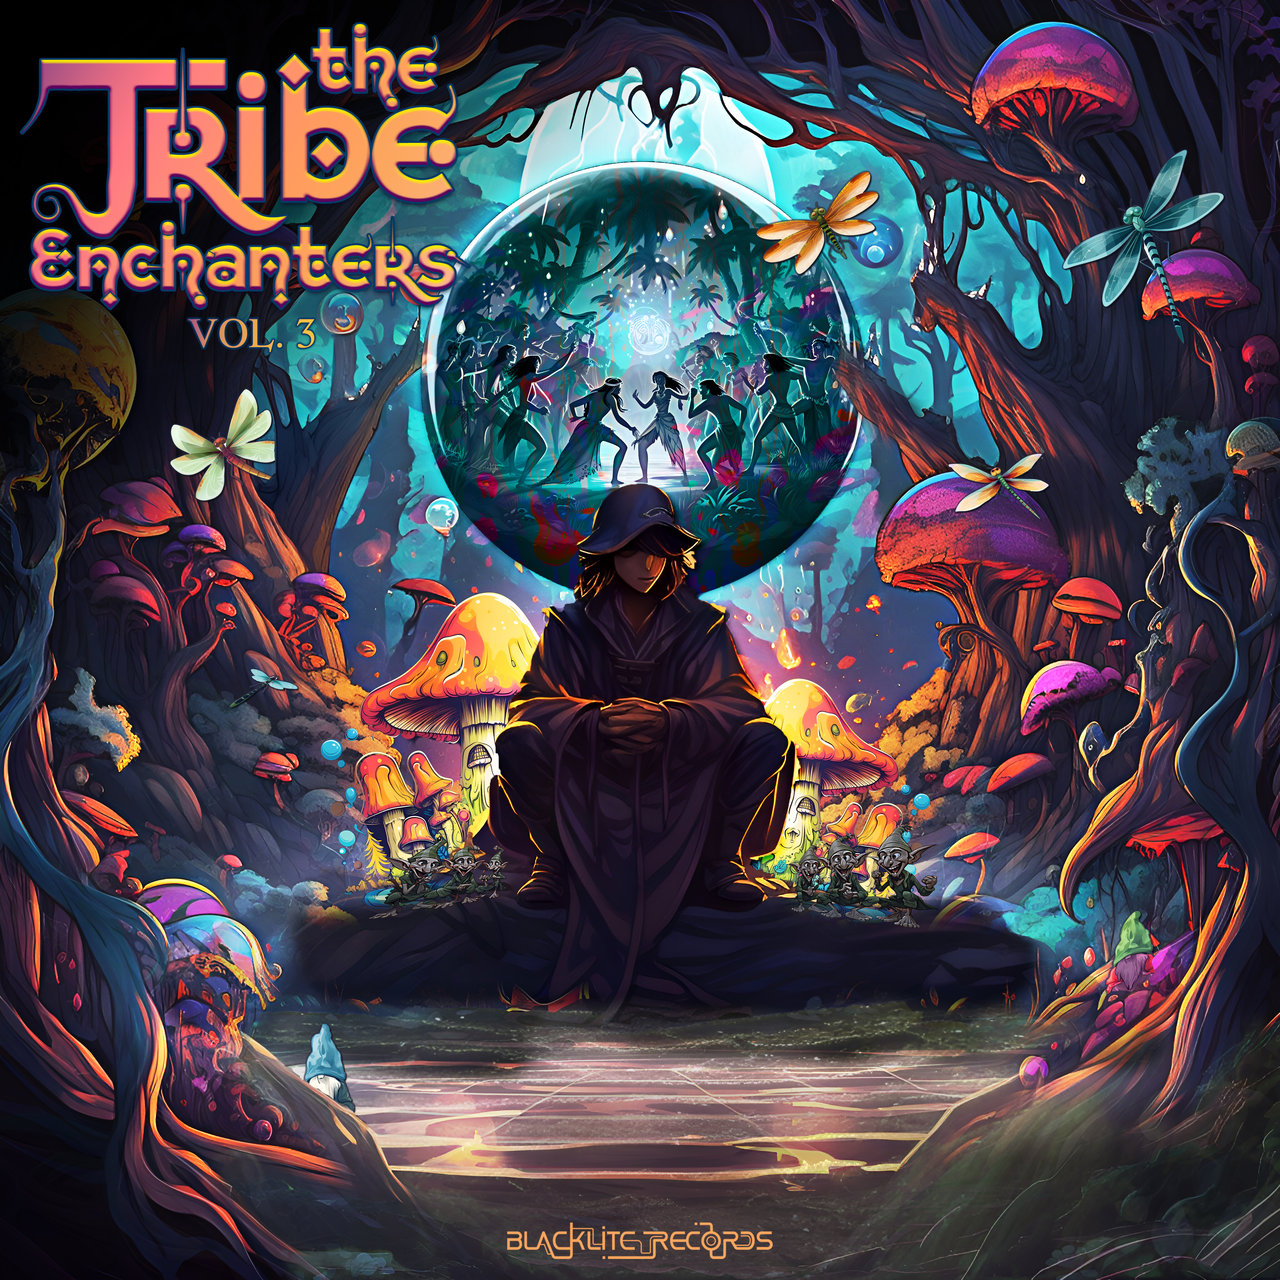 The Tribe Enchanters, Vol 3